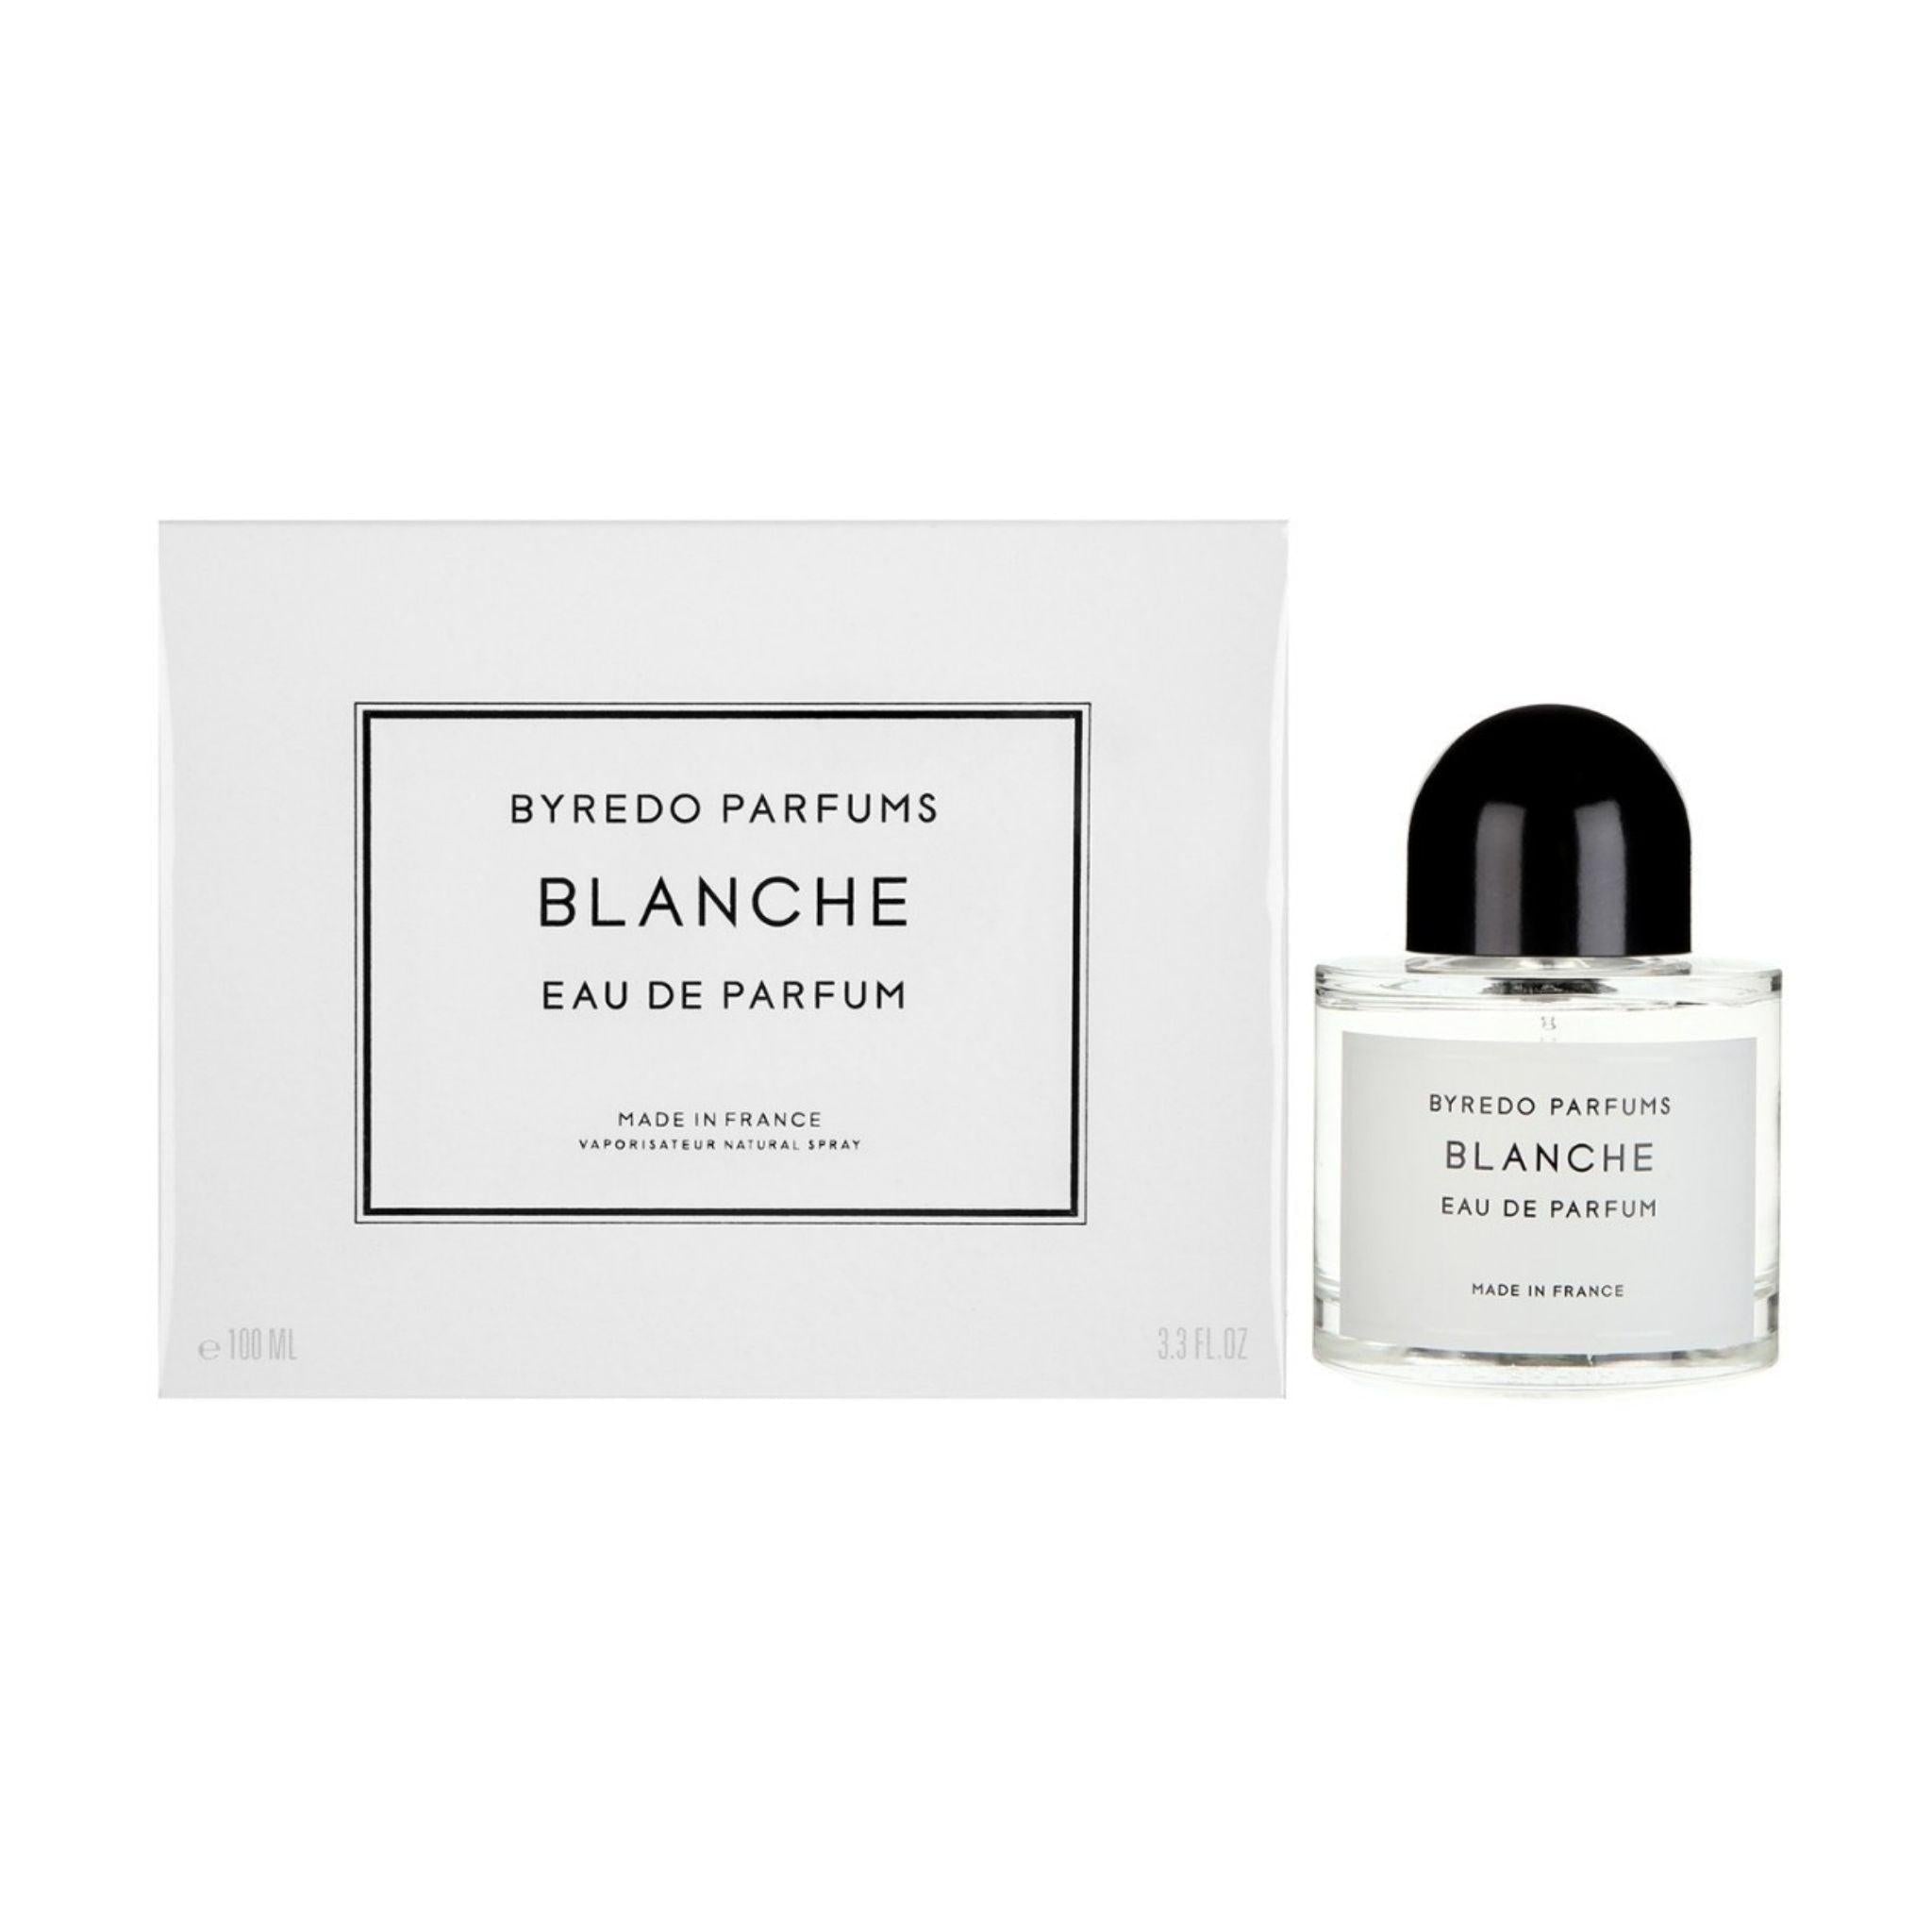 Blanche EDP by Byredo art fragrance